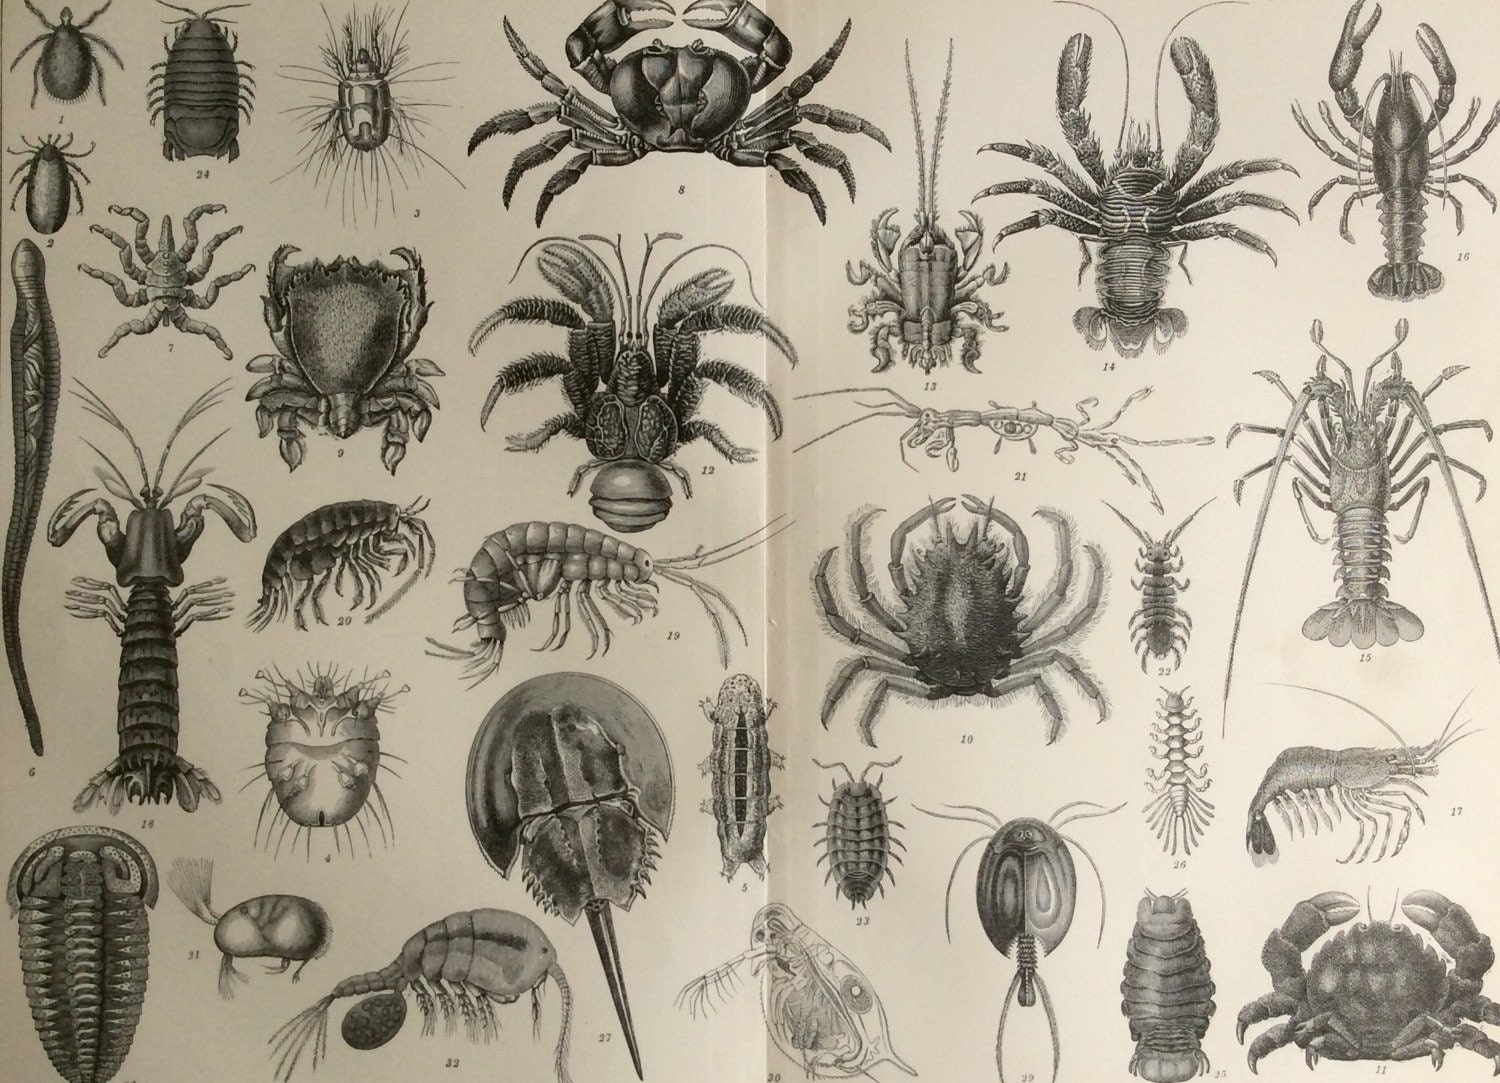 Original Antique Print Victorian Bookplate Engraving 1890 Crustaceans Crabs Lobster Kitchen Seafood